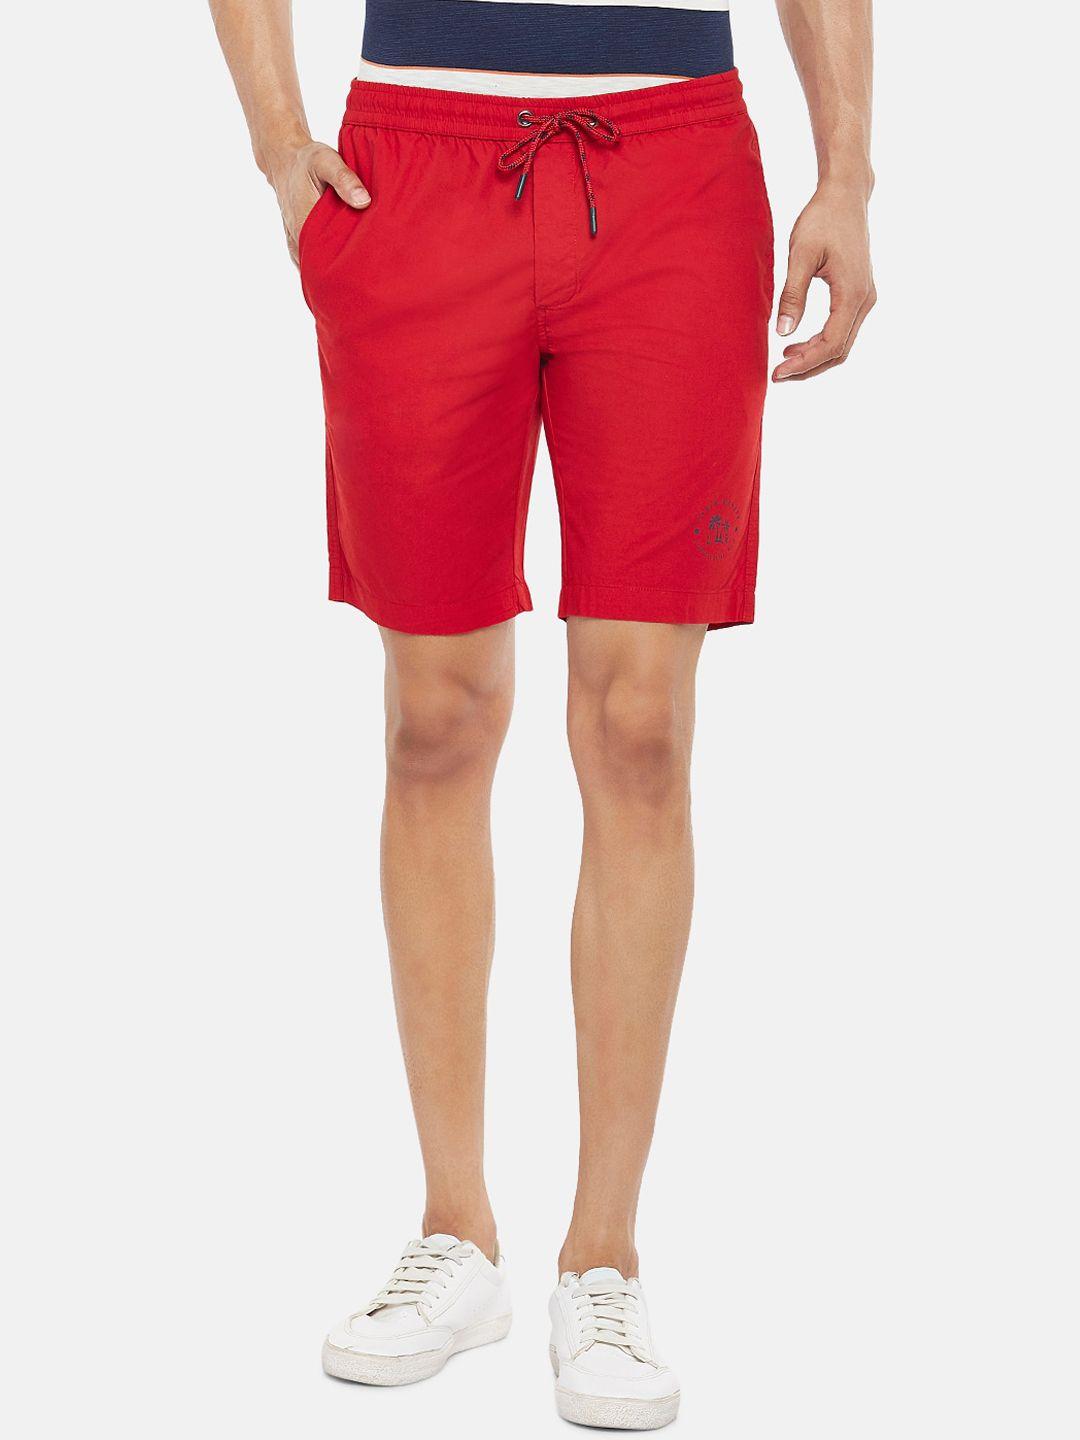 urban ranger by pantaloons men red cotton solid slim fit regular shorts